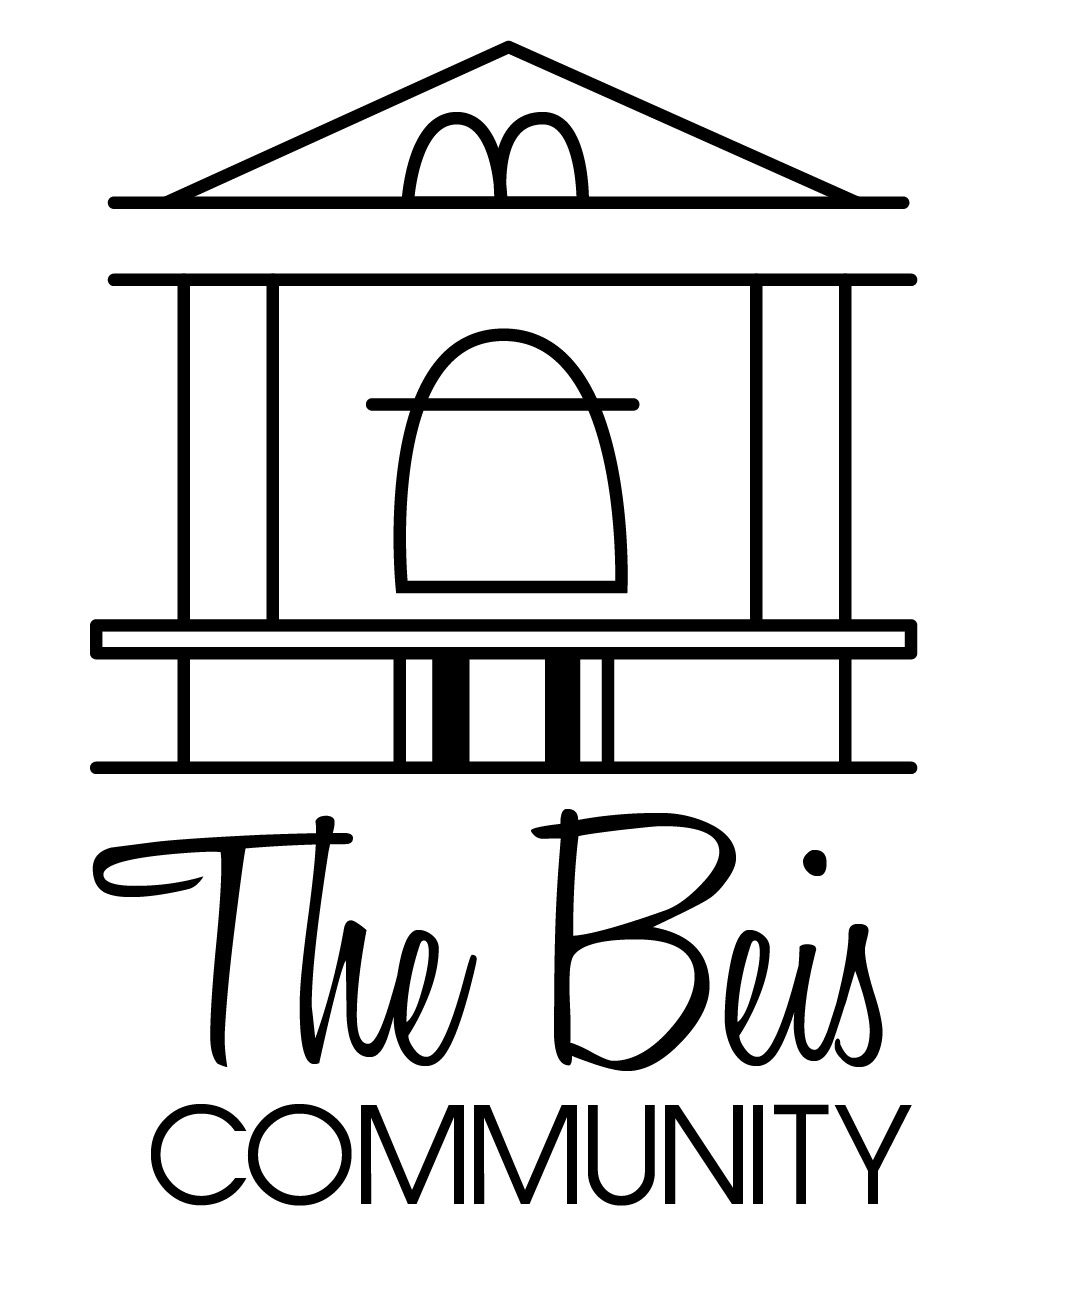 Beis Community logo